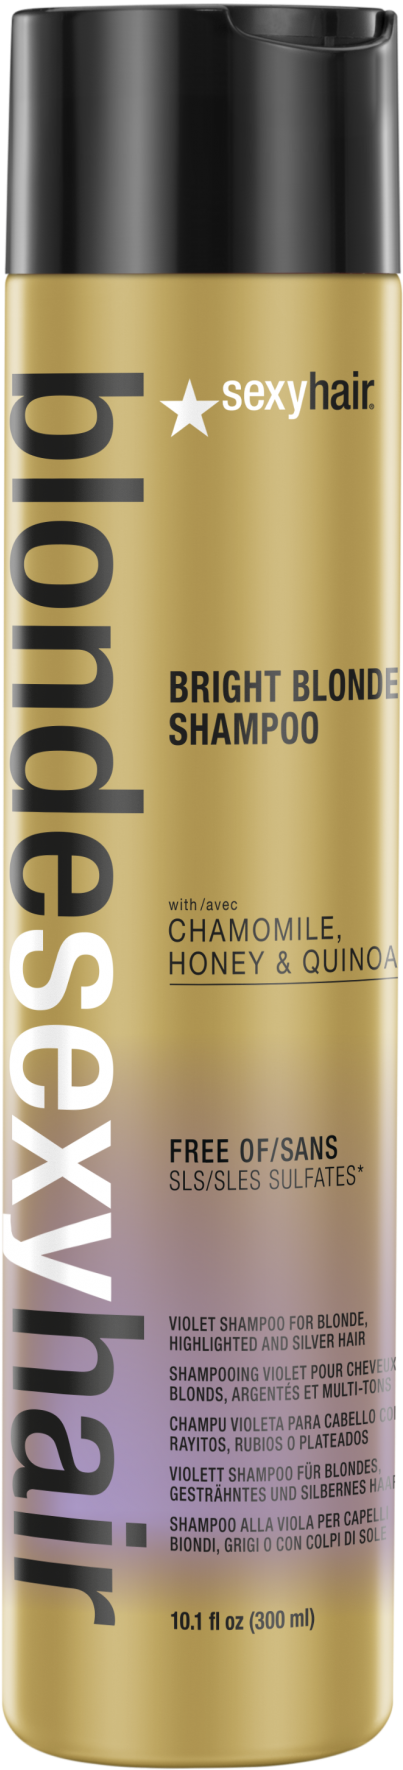 Blonde Hair Care Shampoo Bottle PNG